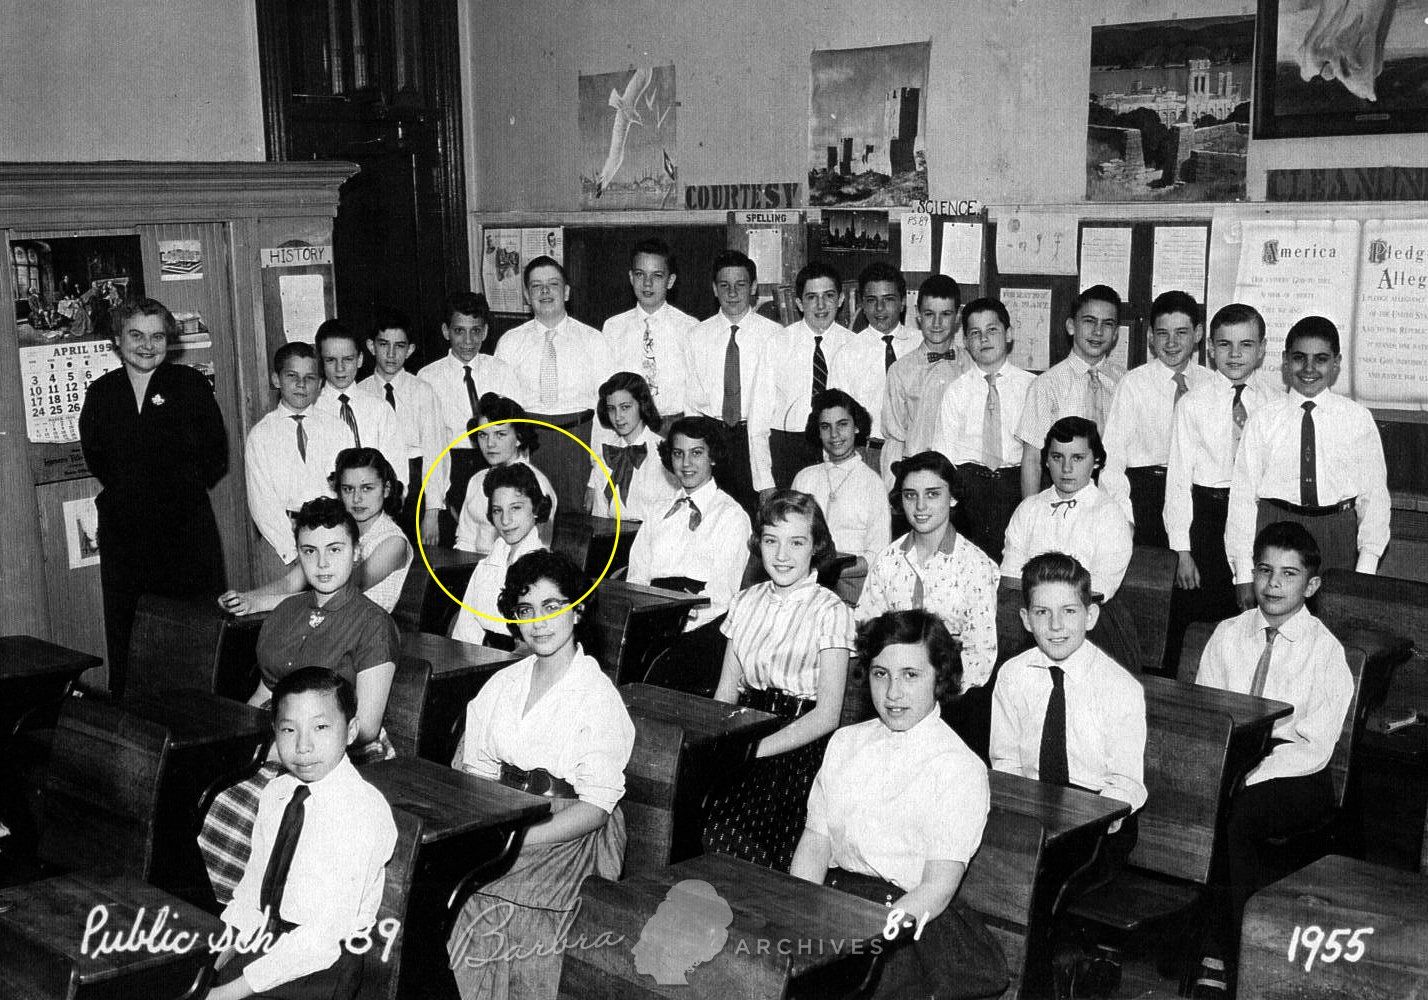 Streisand's Public School 89 class photo, 1955.